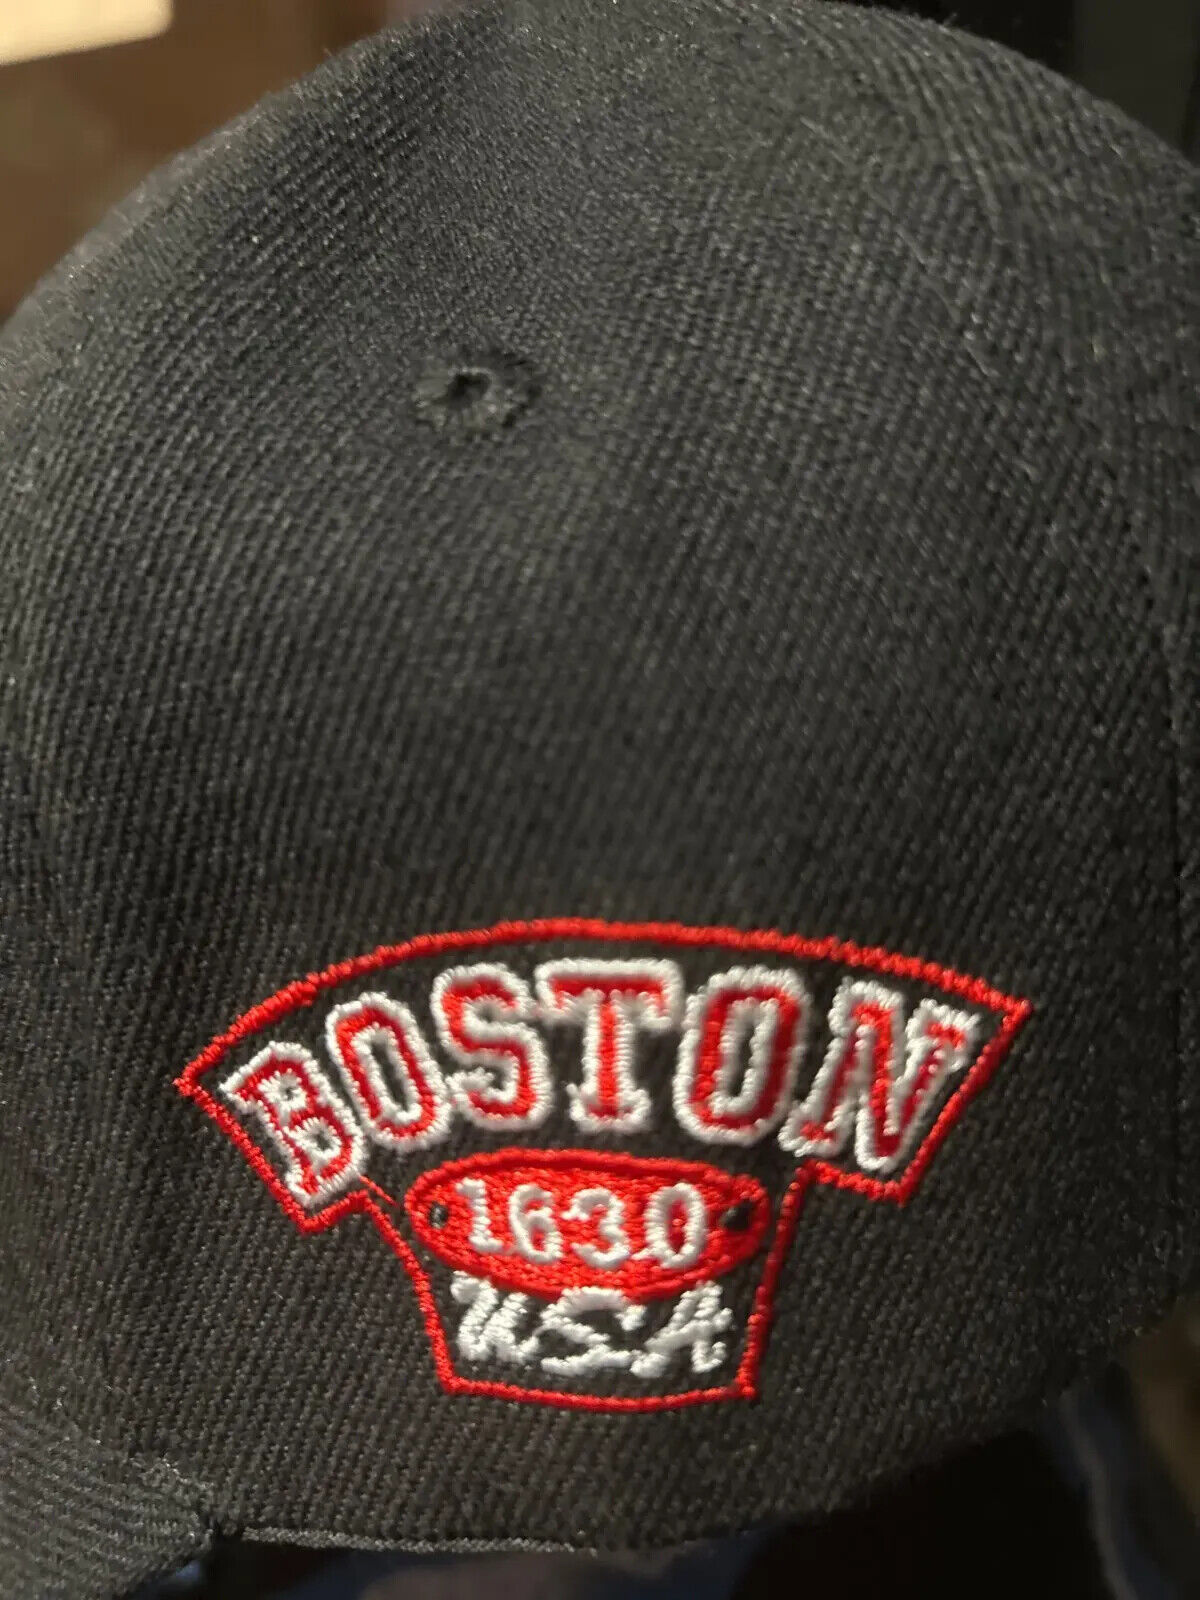 Boston Retro Baseball Cap. Founded in 1630.